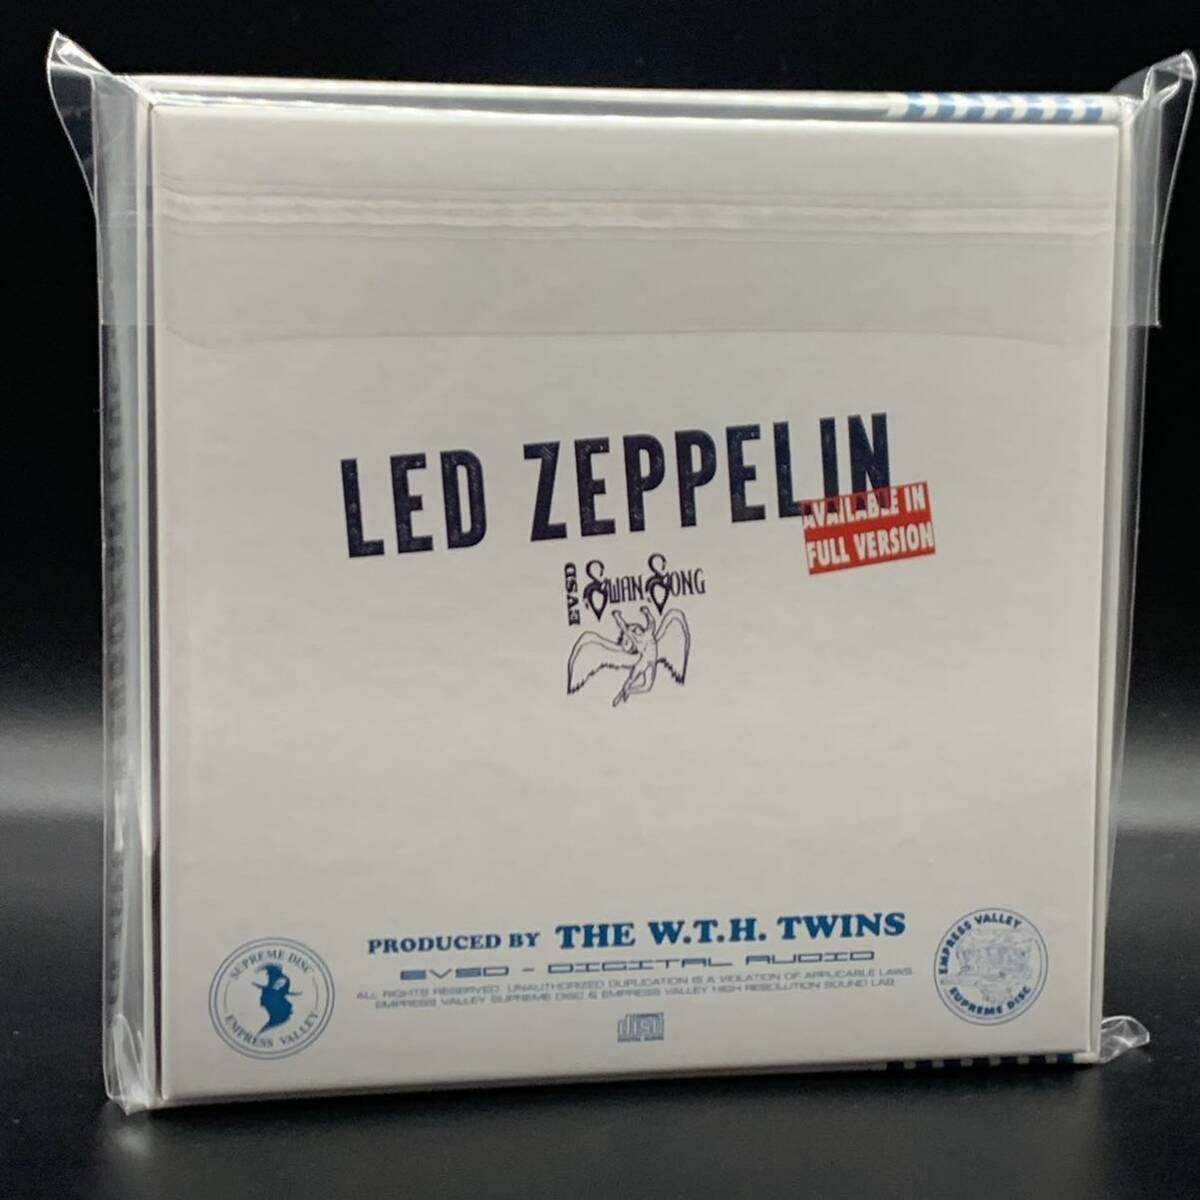 LED ZEPPELIN / LIVE AT BUDOKAN 1972「ジェット・ストリーム」(4CD BOX) 完全初登場超高音質マスター！間違いなく決定盤！残少です！_画像2